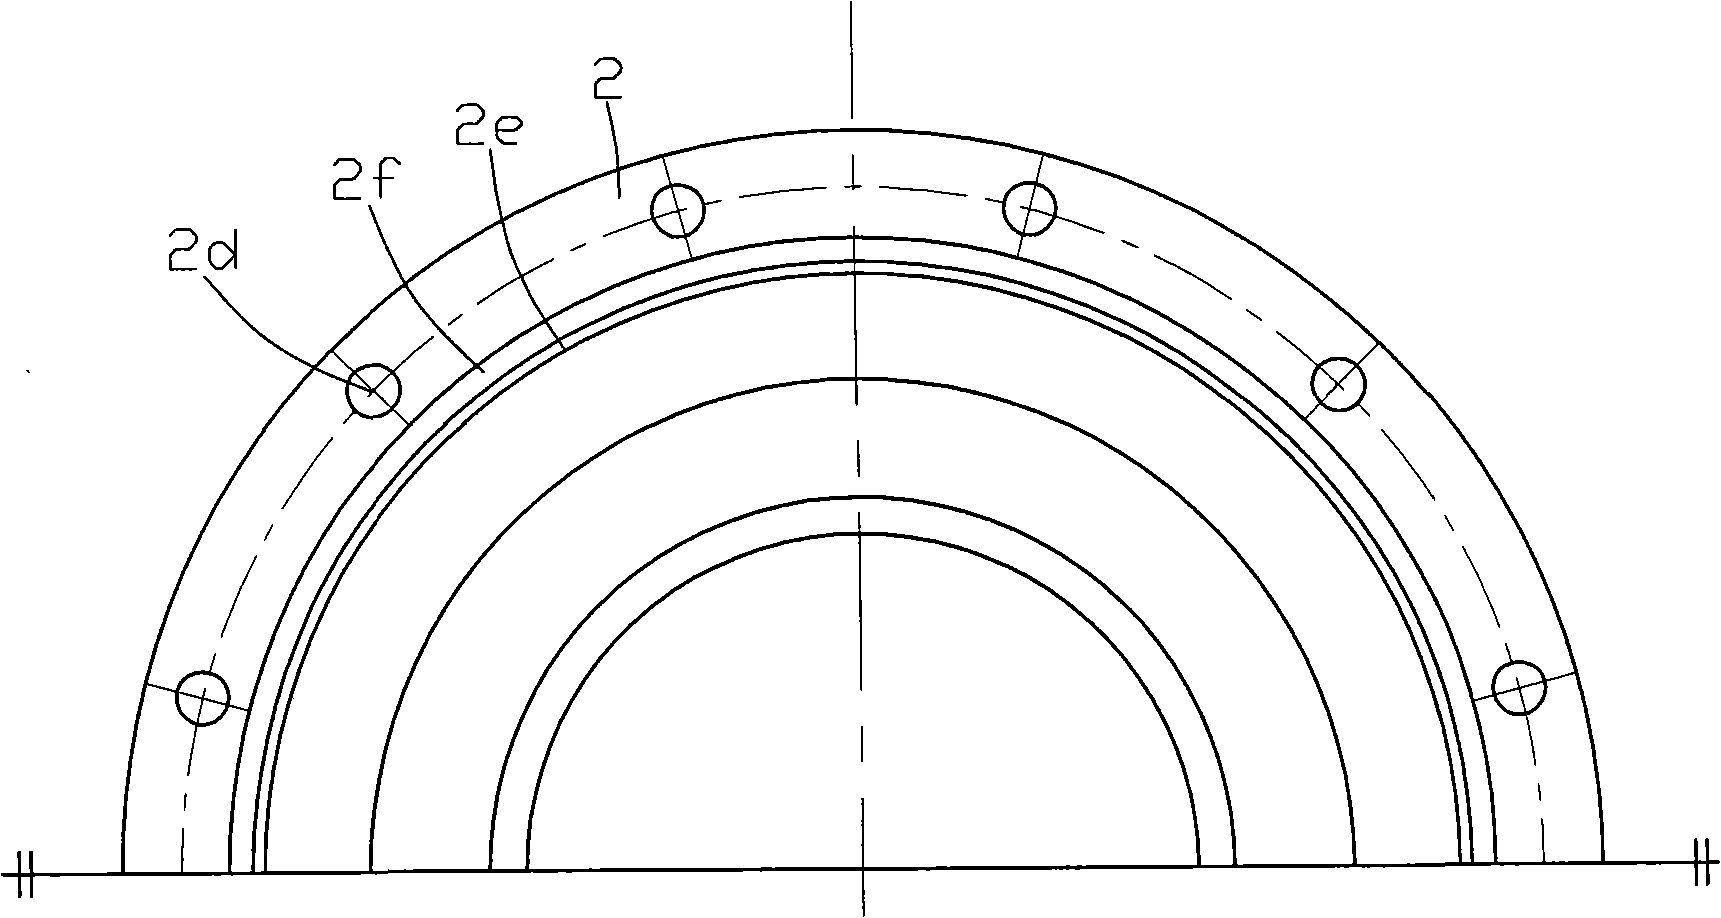 Atomizing disk of high speed centrifugal type atomizer